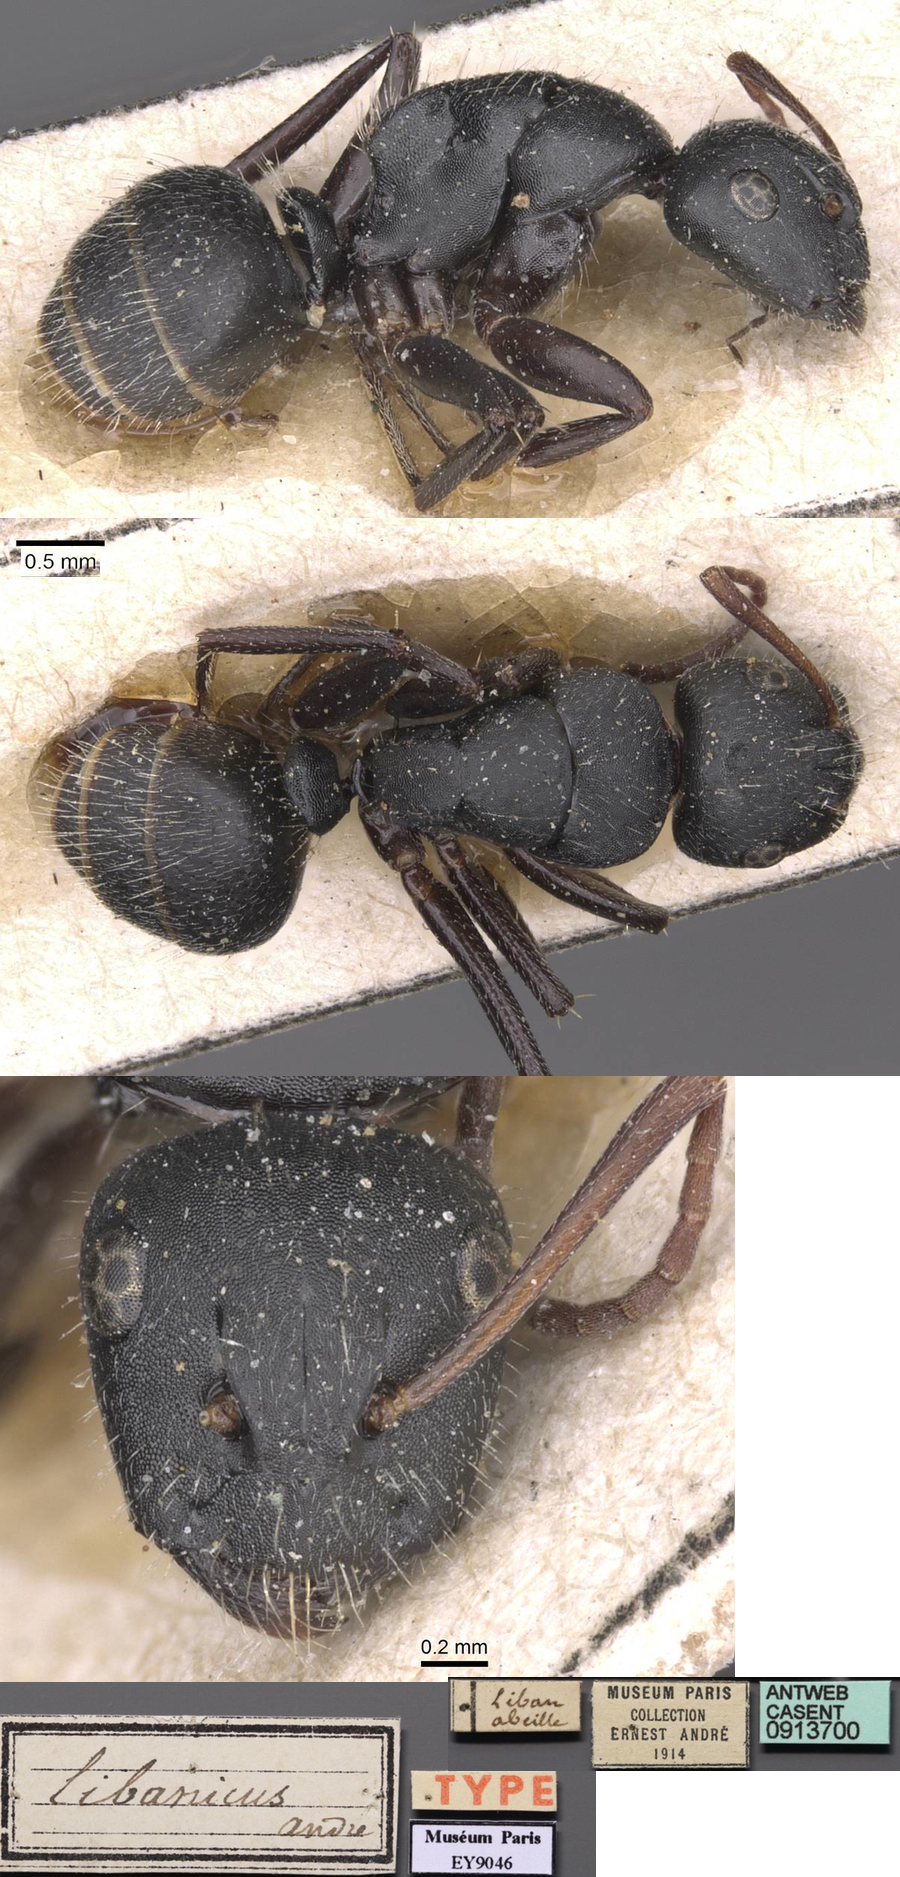 Camponotus libanicus major